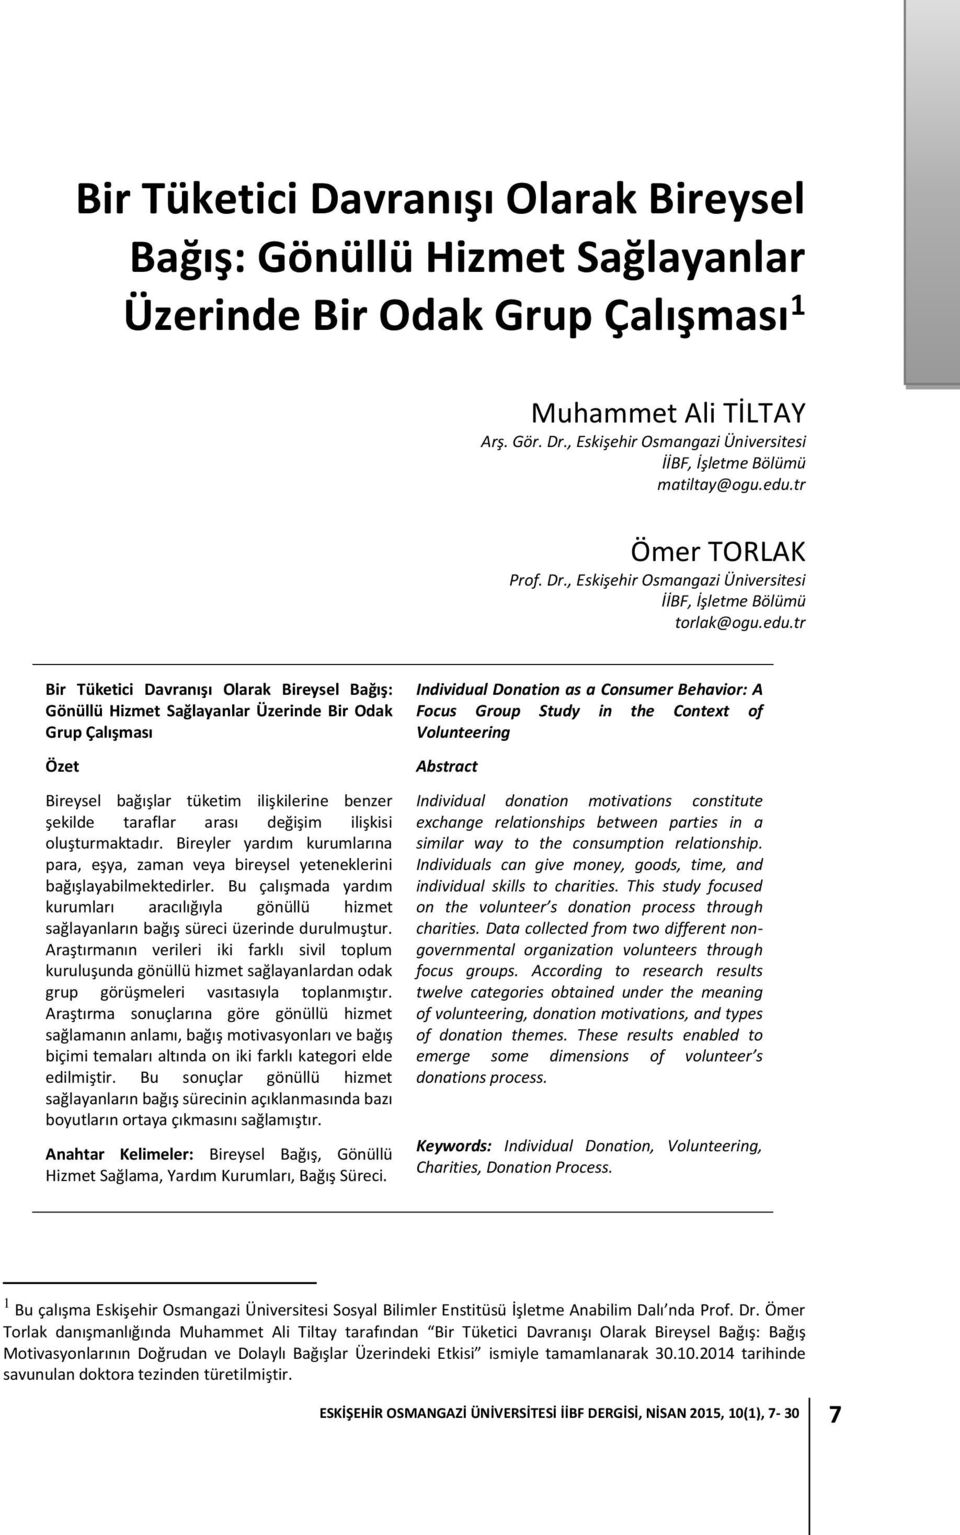 tr Ömer TORLAK Prof. Dr., Eskişehir Osmangazi Üniversitesi İİBF, İşletme Bölümü torlak@ogu.edu.